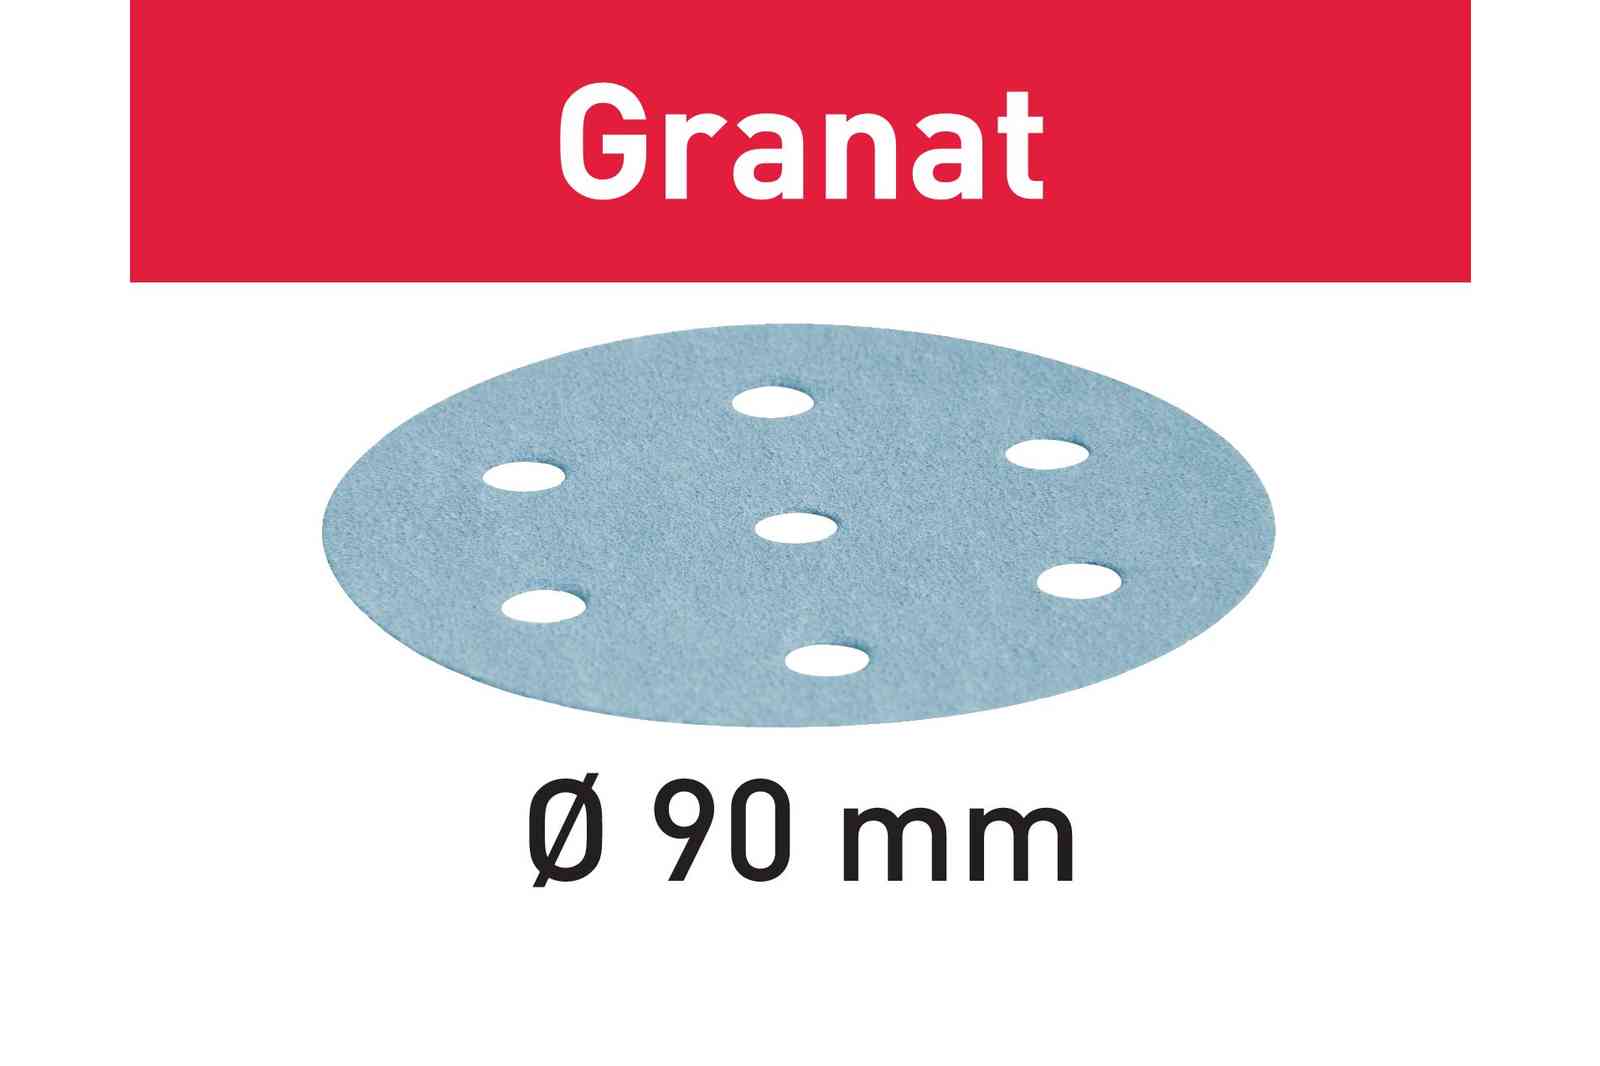 Disque abrasif - FESTOOL 497369 - Ø 90 mm - grain 180 - Bte 100